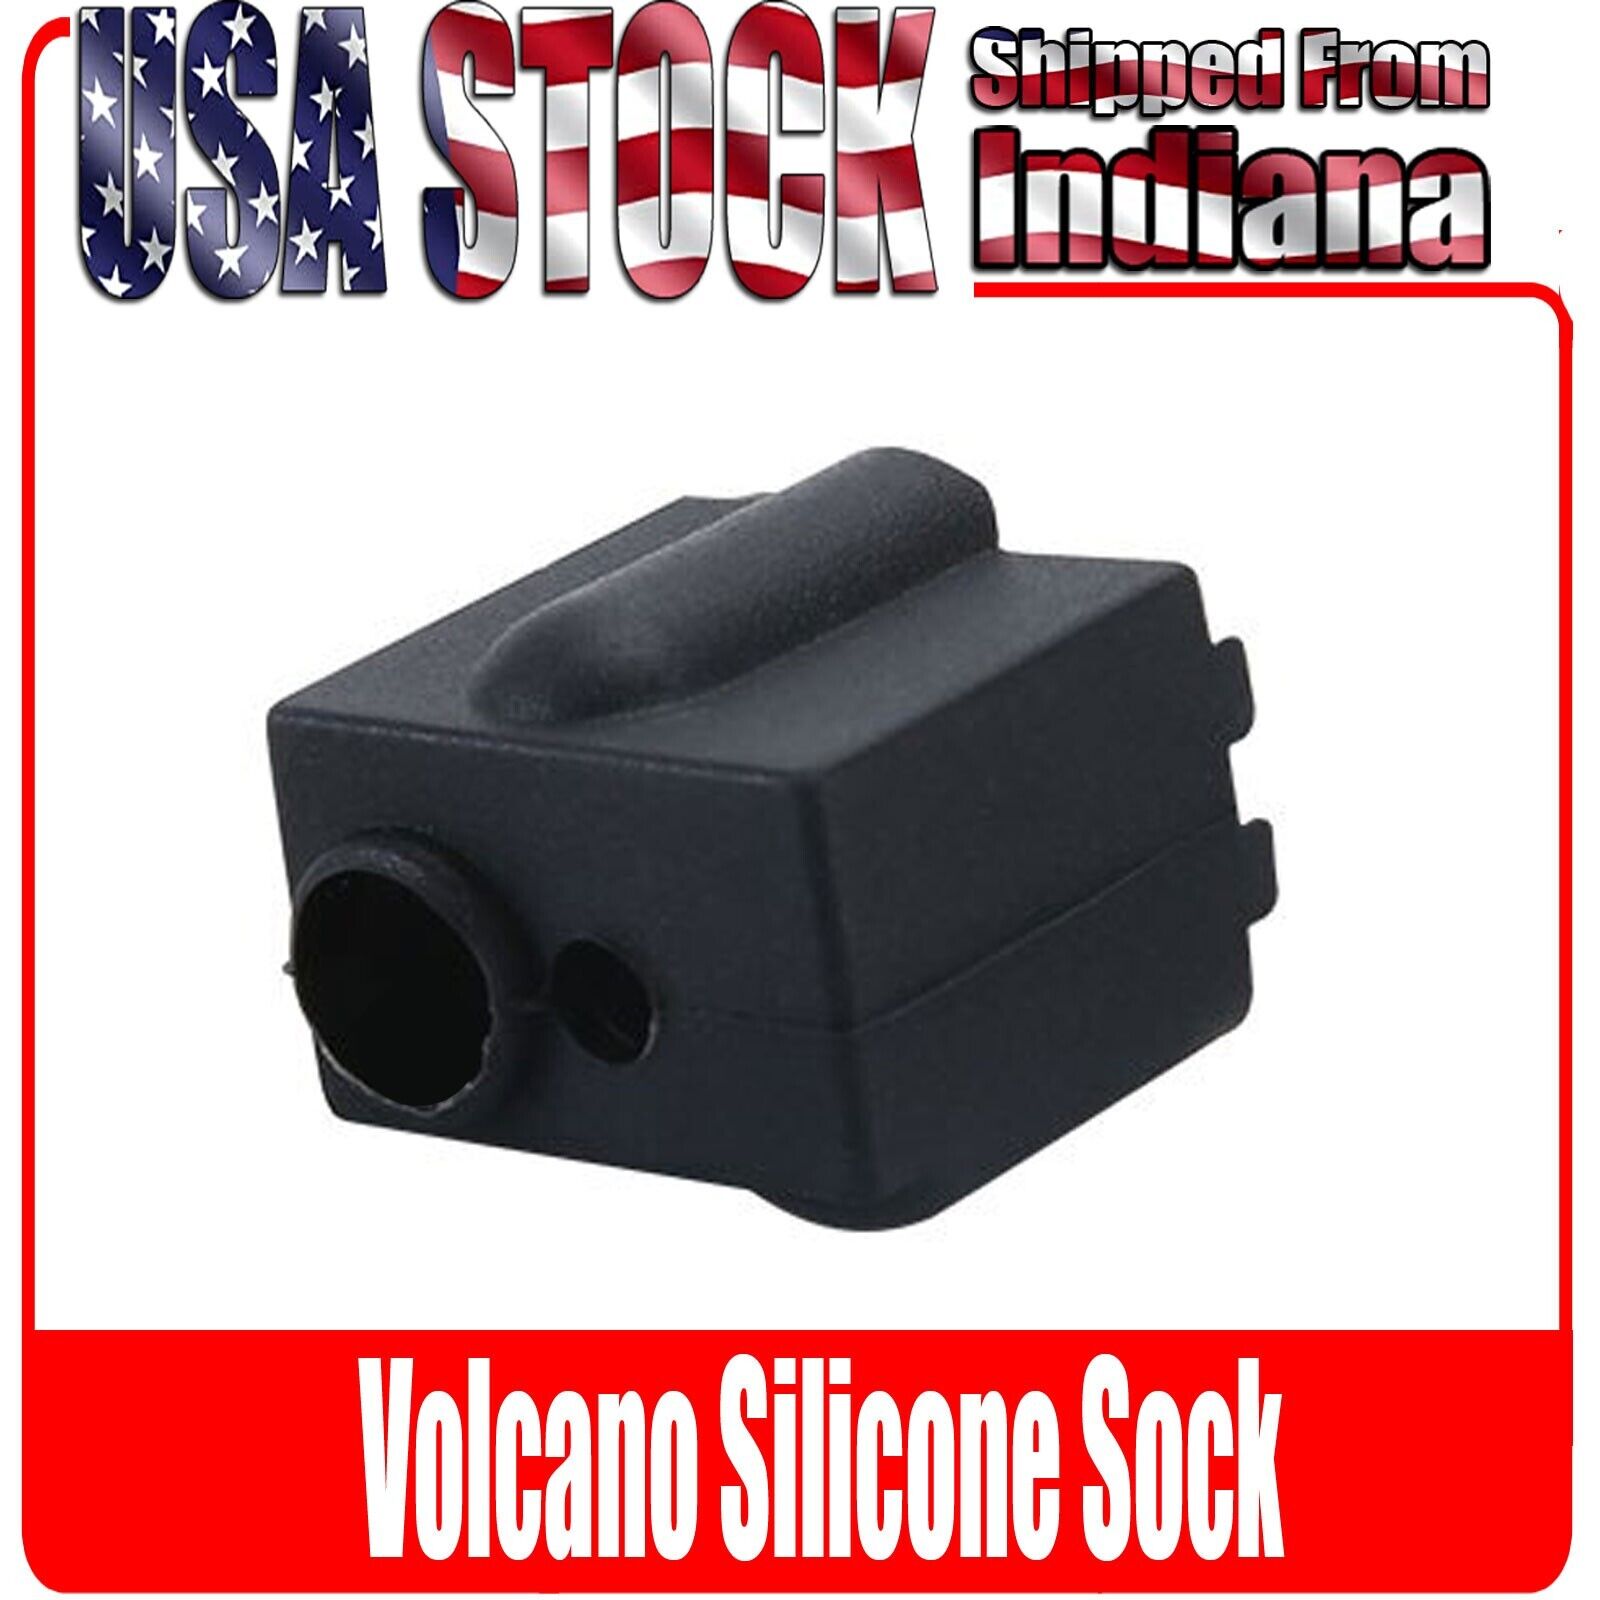 Volcano Silicone Sock, Insulation for Volcano Hotend Heat Block, Black, 3 Pack